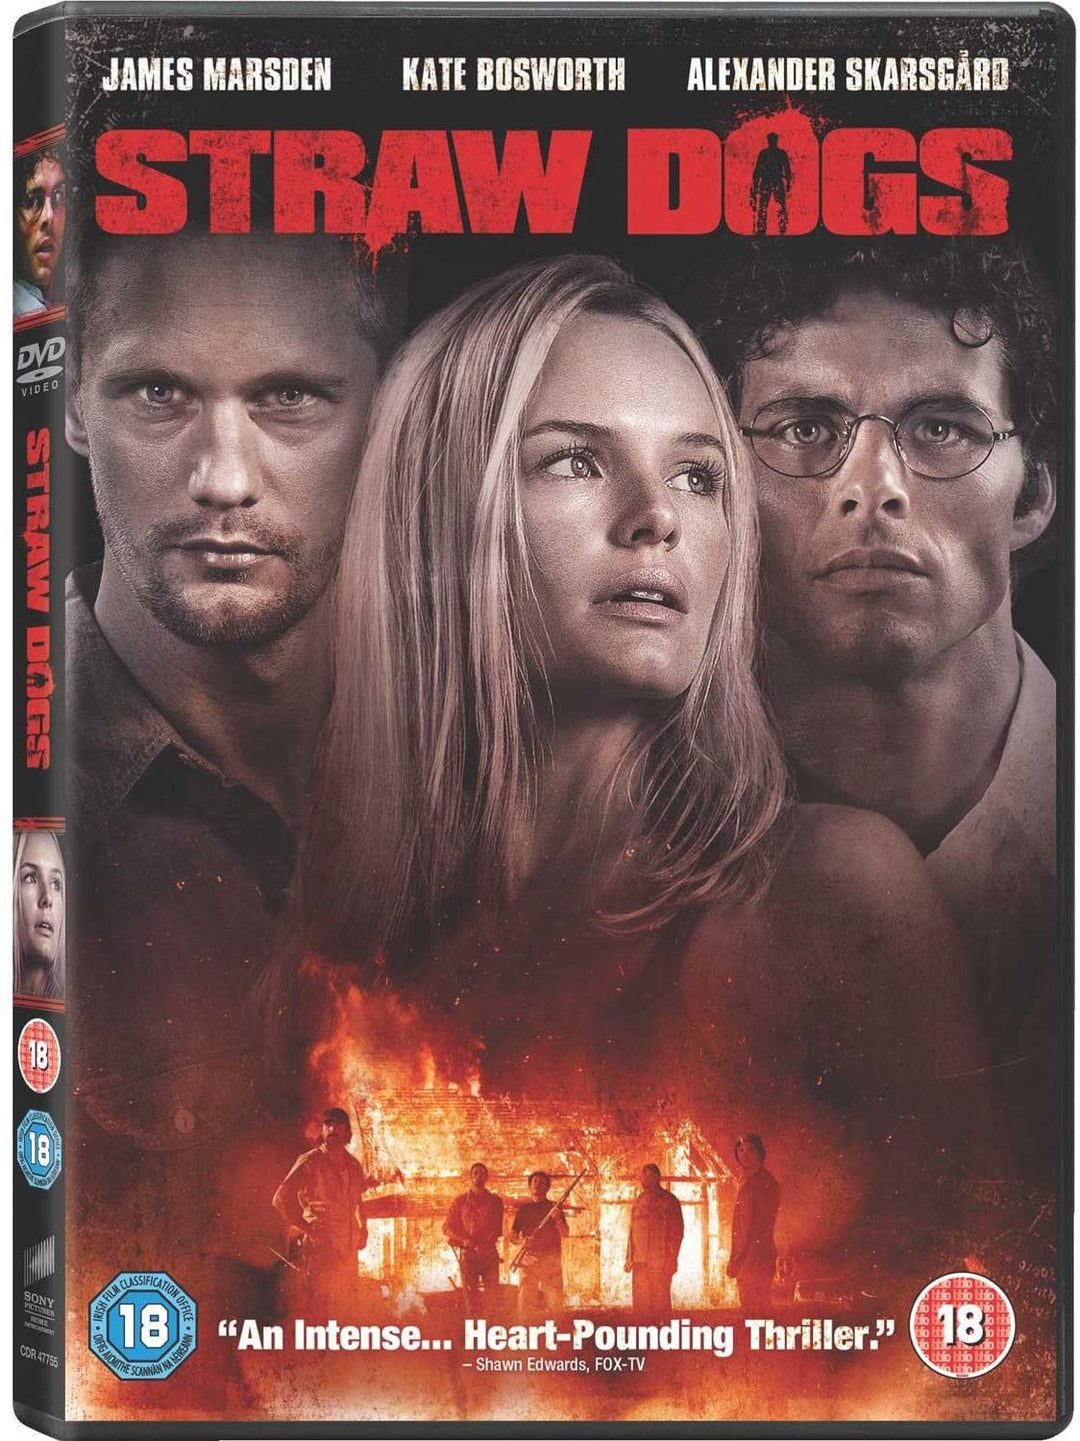 Straw Dogs [2011] - Thriller/Drama [DVD]